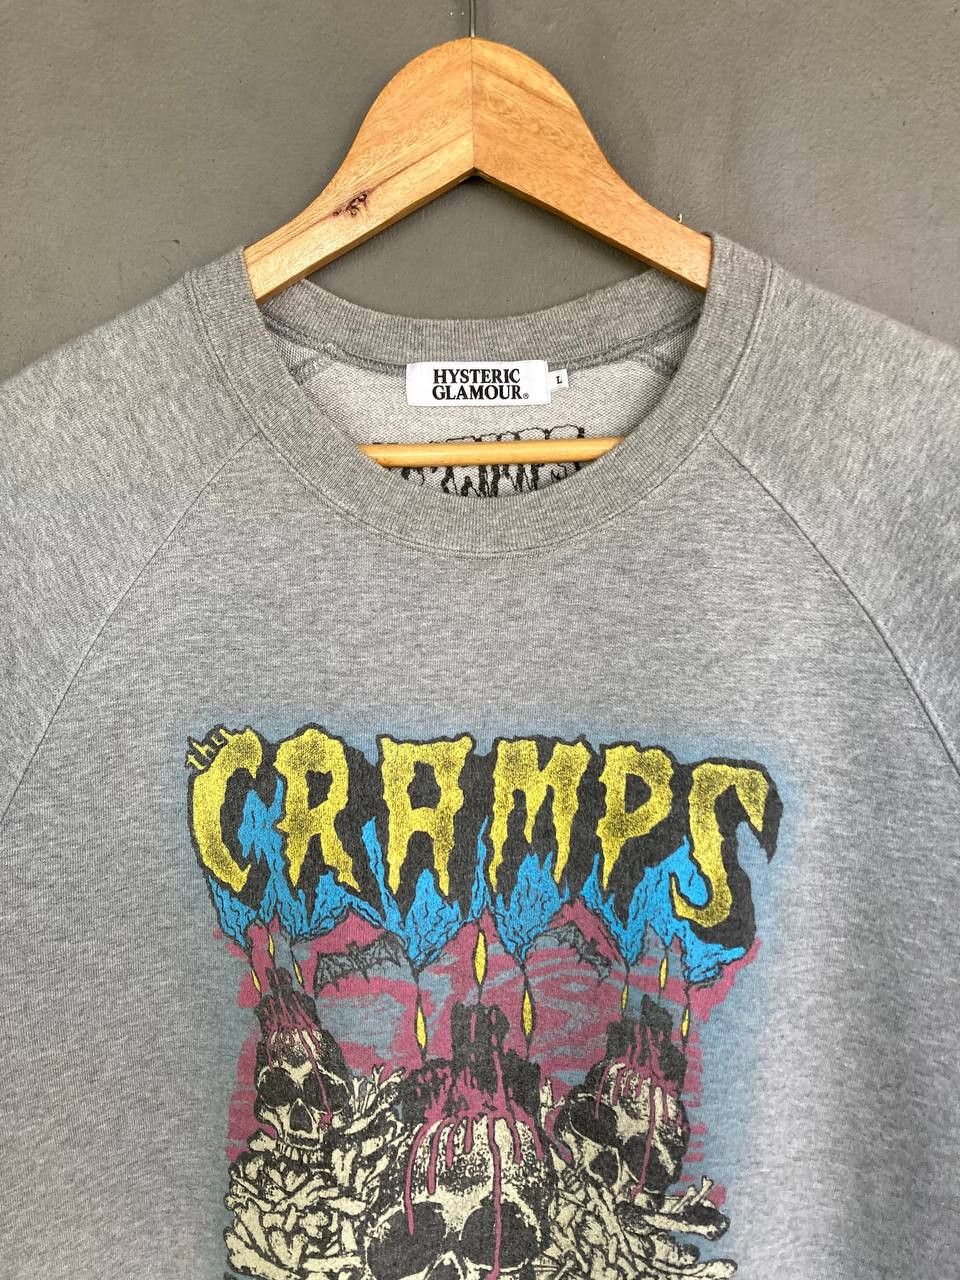 Hysteric Glamour x The Cramps Short Sleeve Sweatshirt - 3